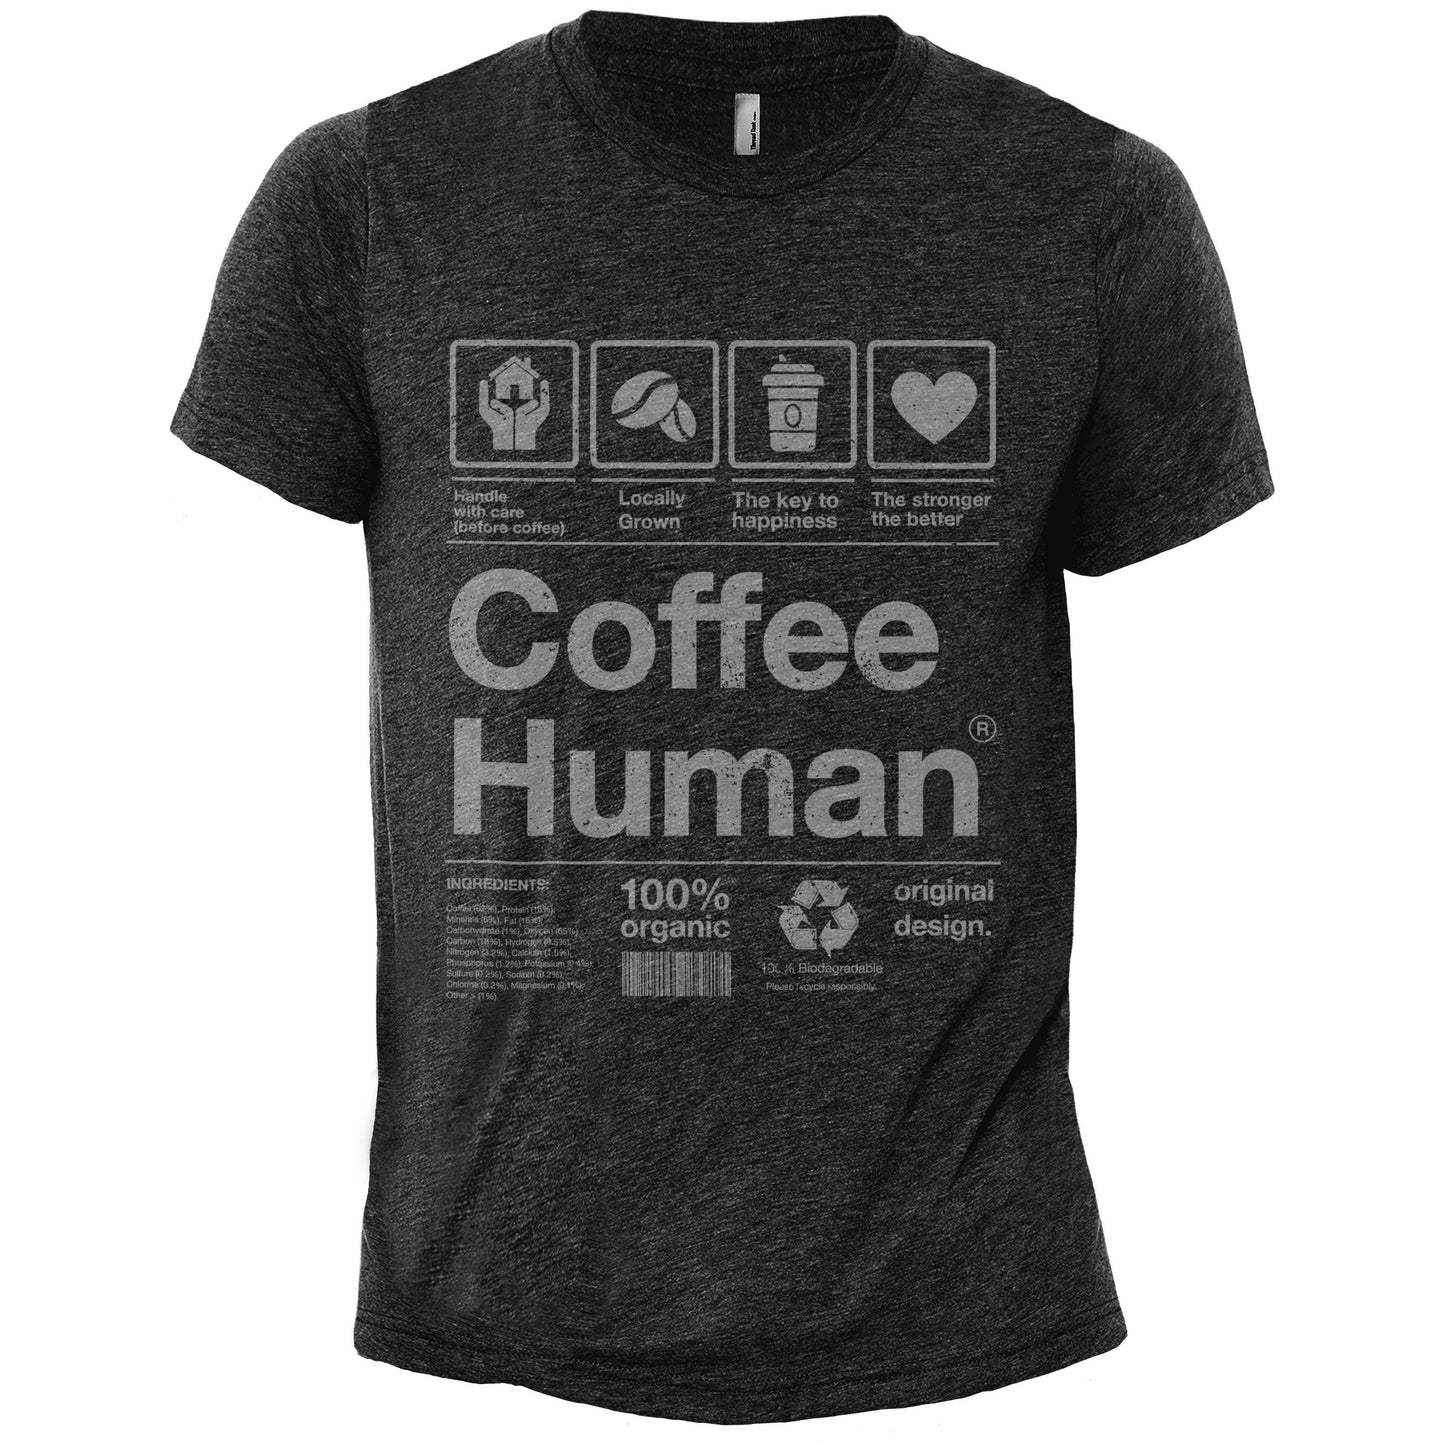 Coffee Human Charcoal Printed Graphic Men's Crew T-Shirt Tee